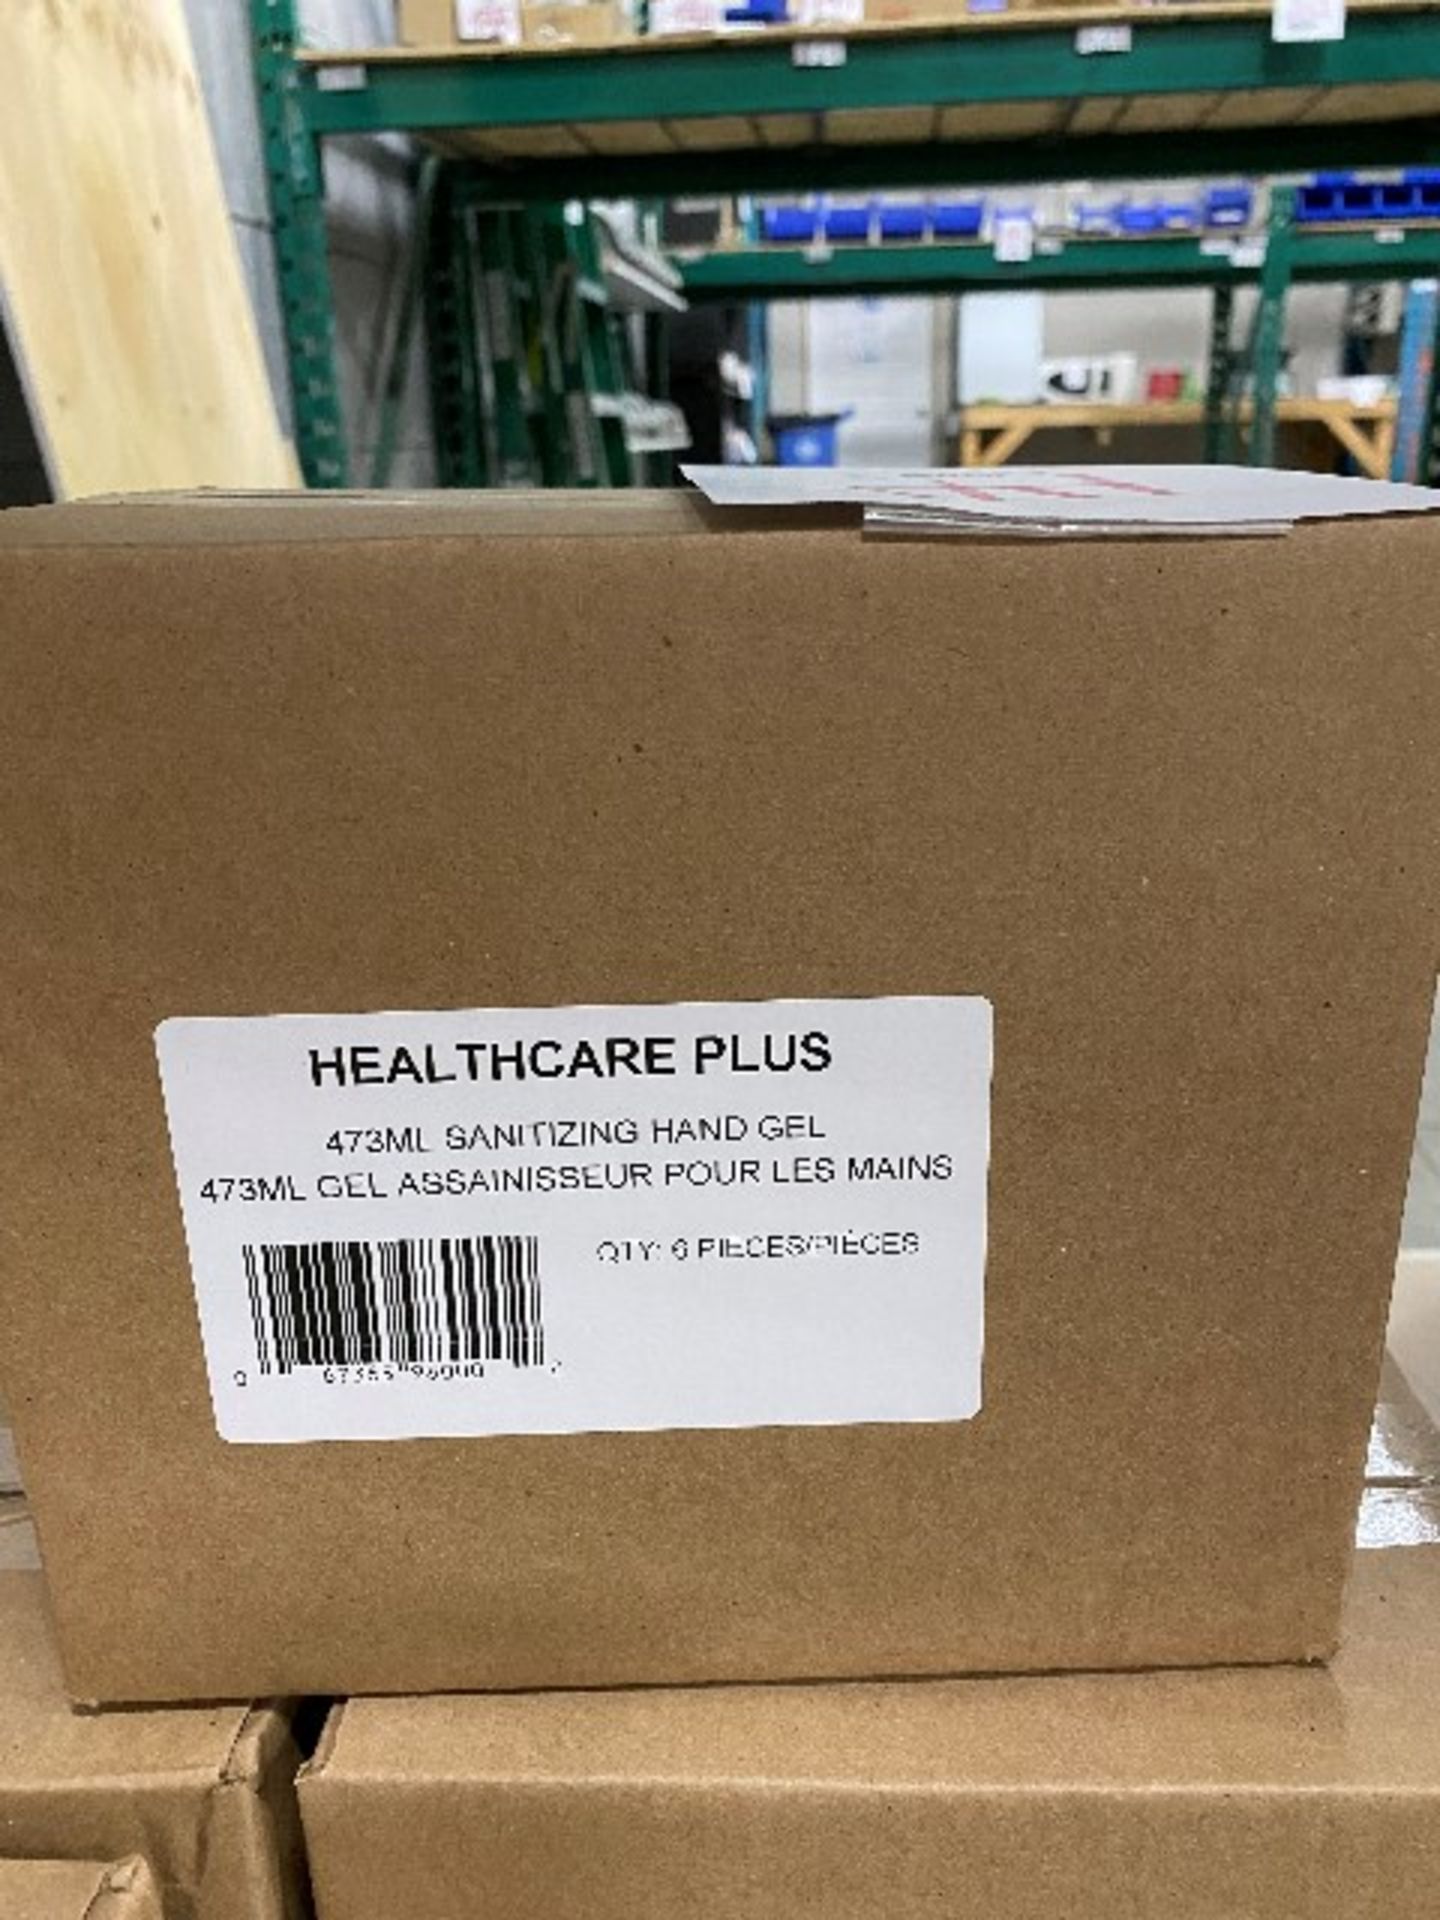 Healthcare Plus sanitizing hand gel, 6pcs per box, 7 boxes - Image 2 of 2